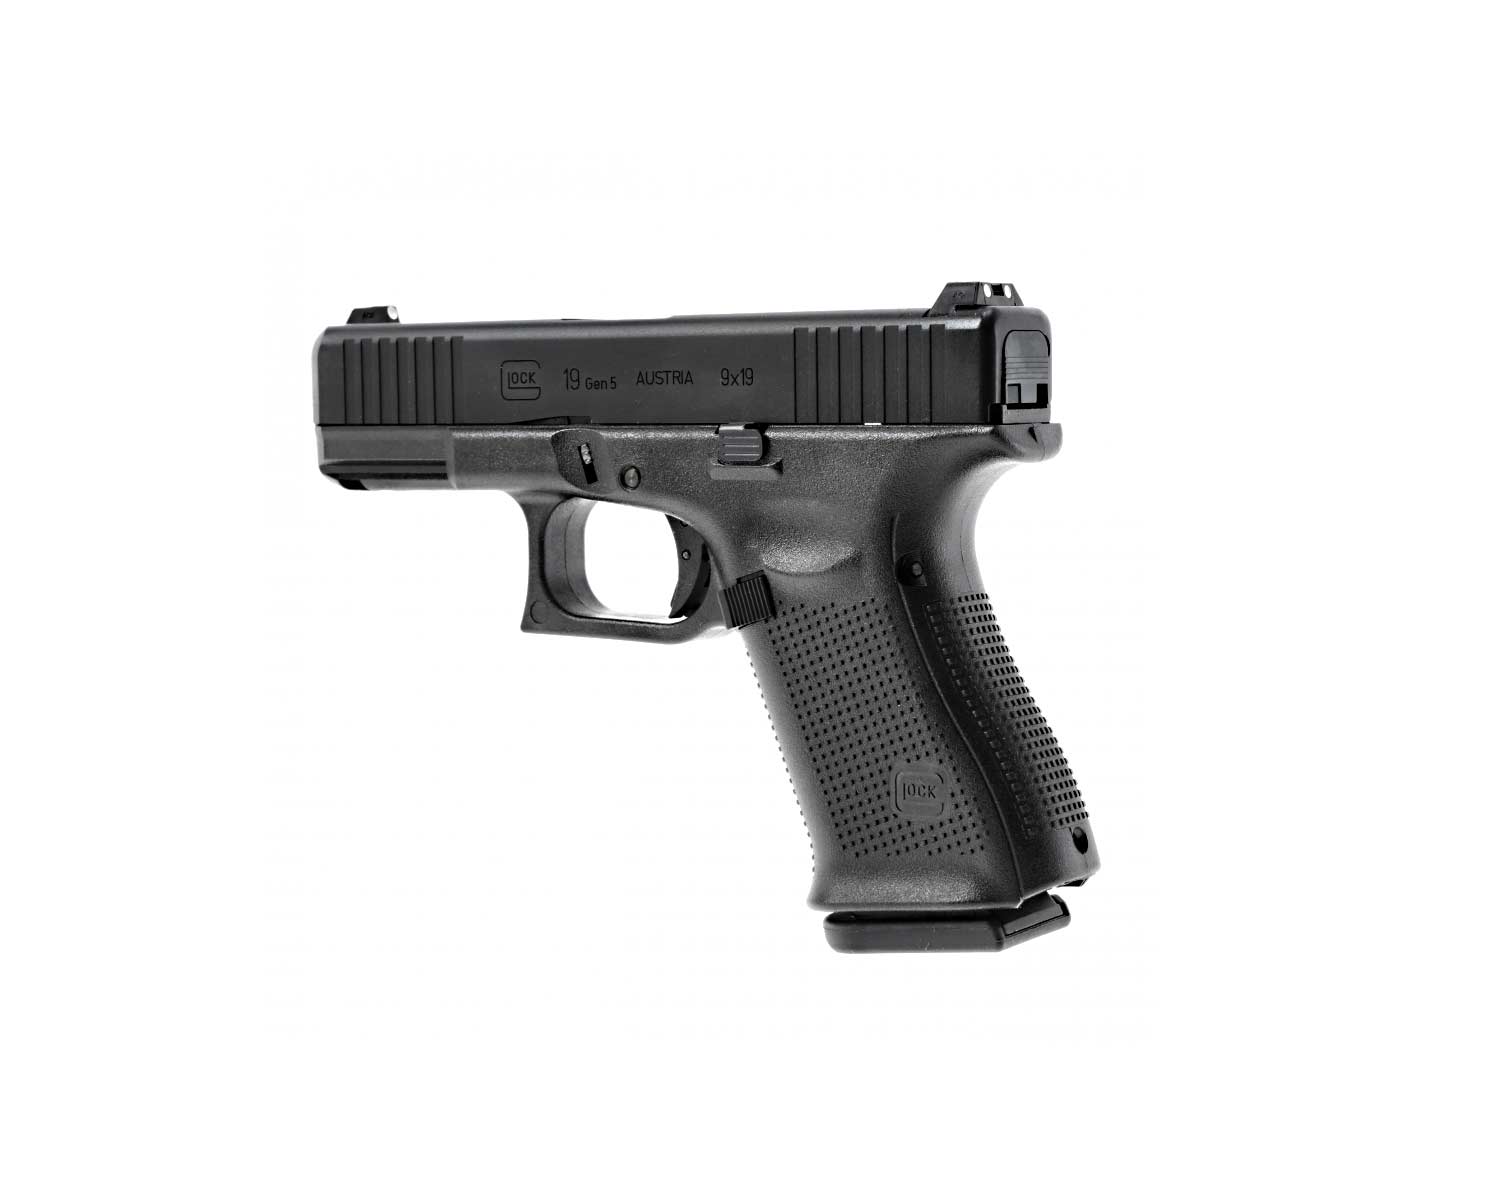 replika pistolet asg glock 19 gen 5 6 mm a4399270d5c44264be248d81103c1549 7c7ff0ae